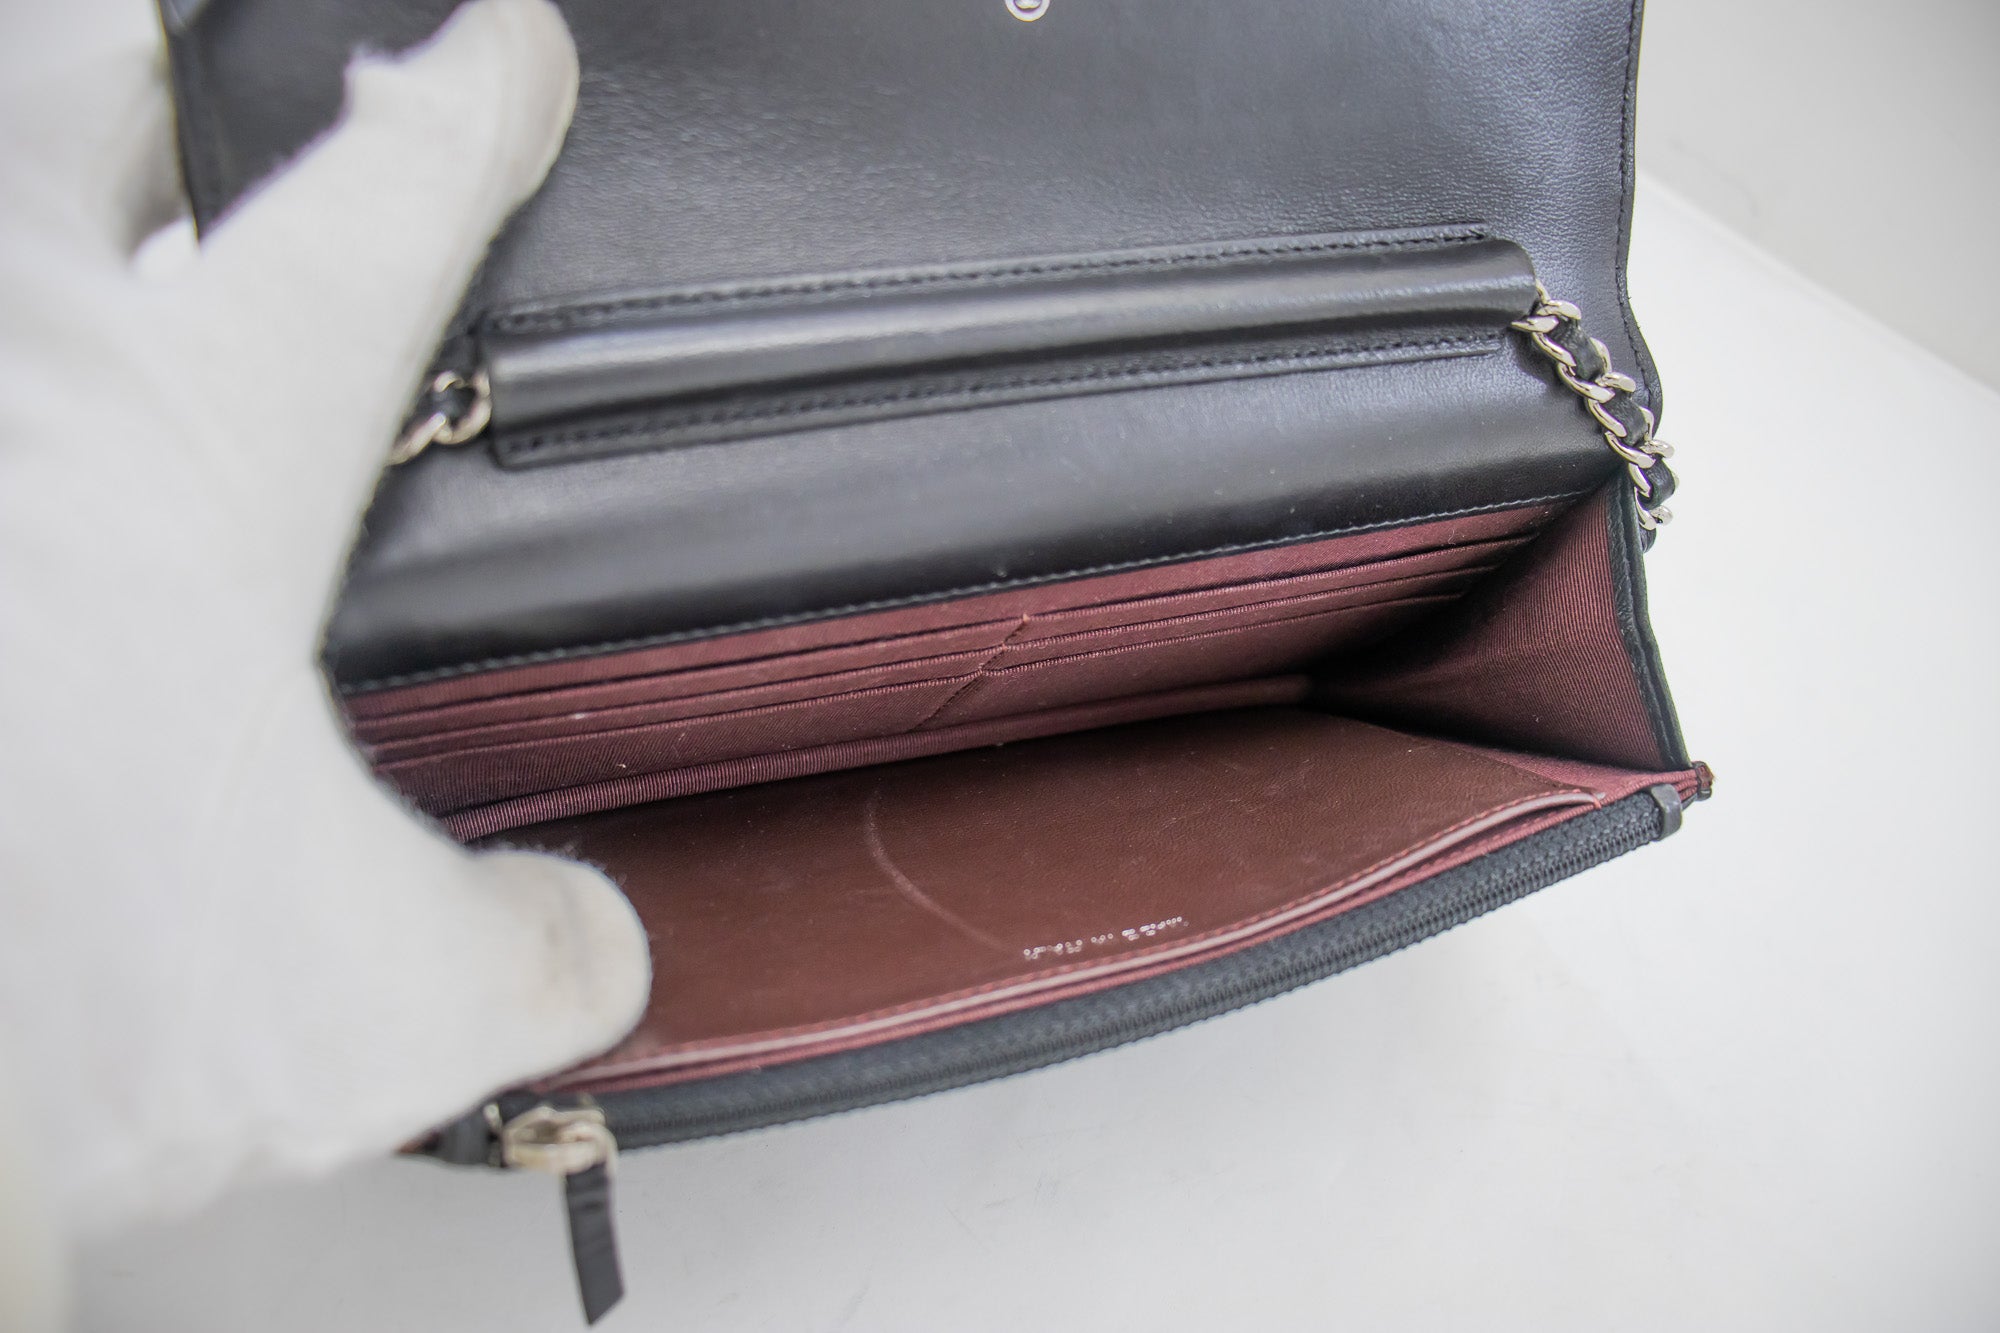 Chanel Classic Denim WOC Wallet On Chain Handbag – The